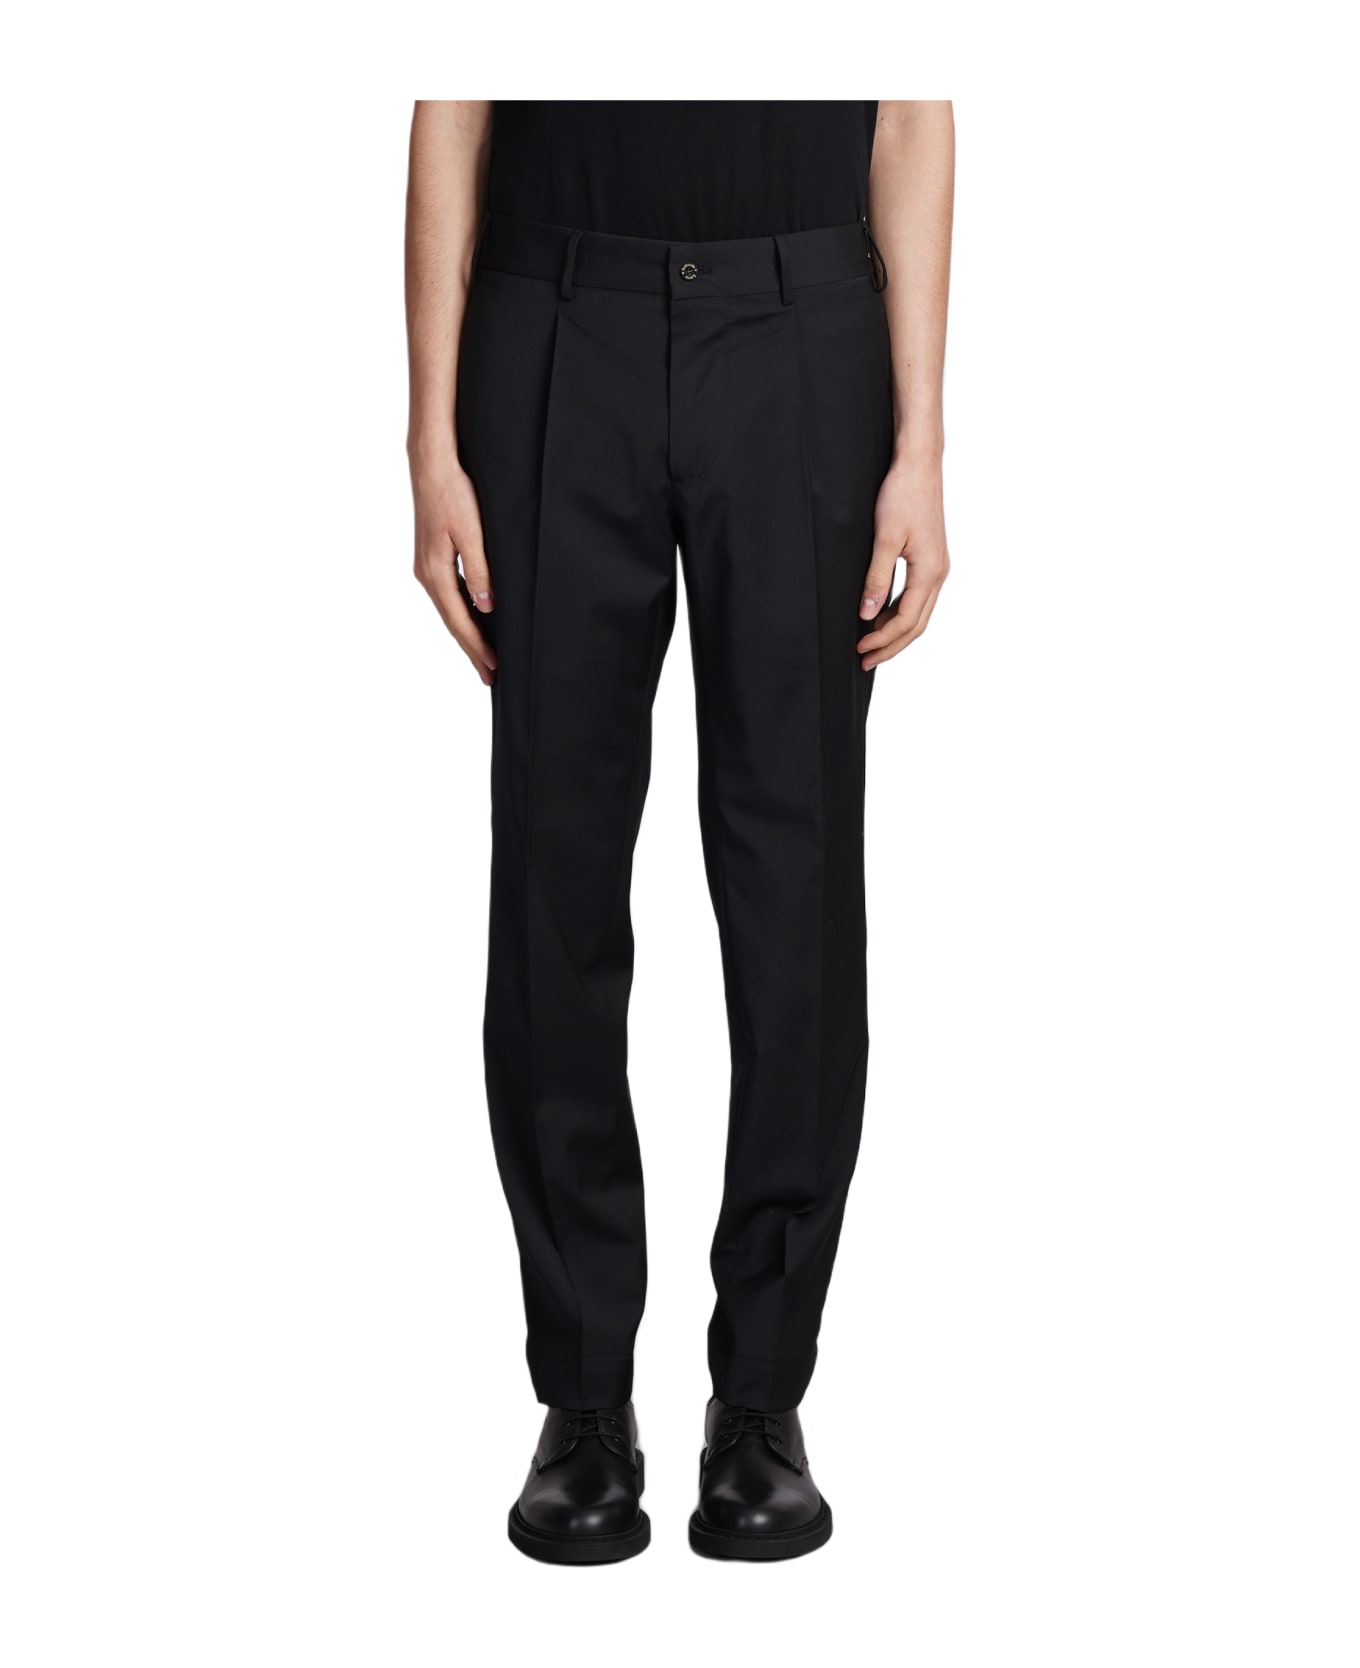 Santaniello Pants In Black Polyester - black